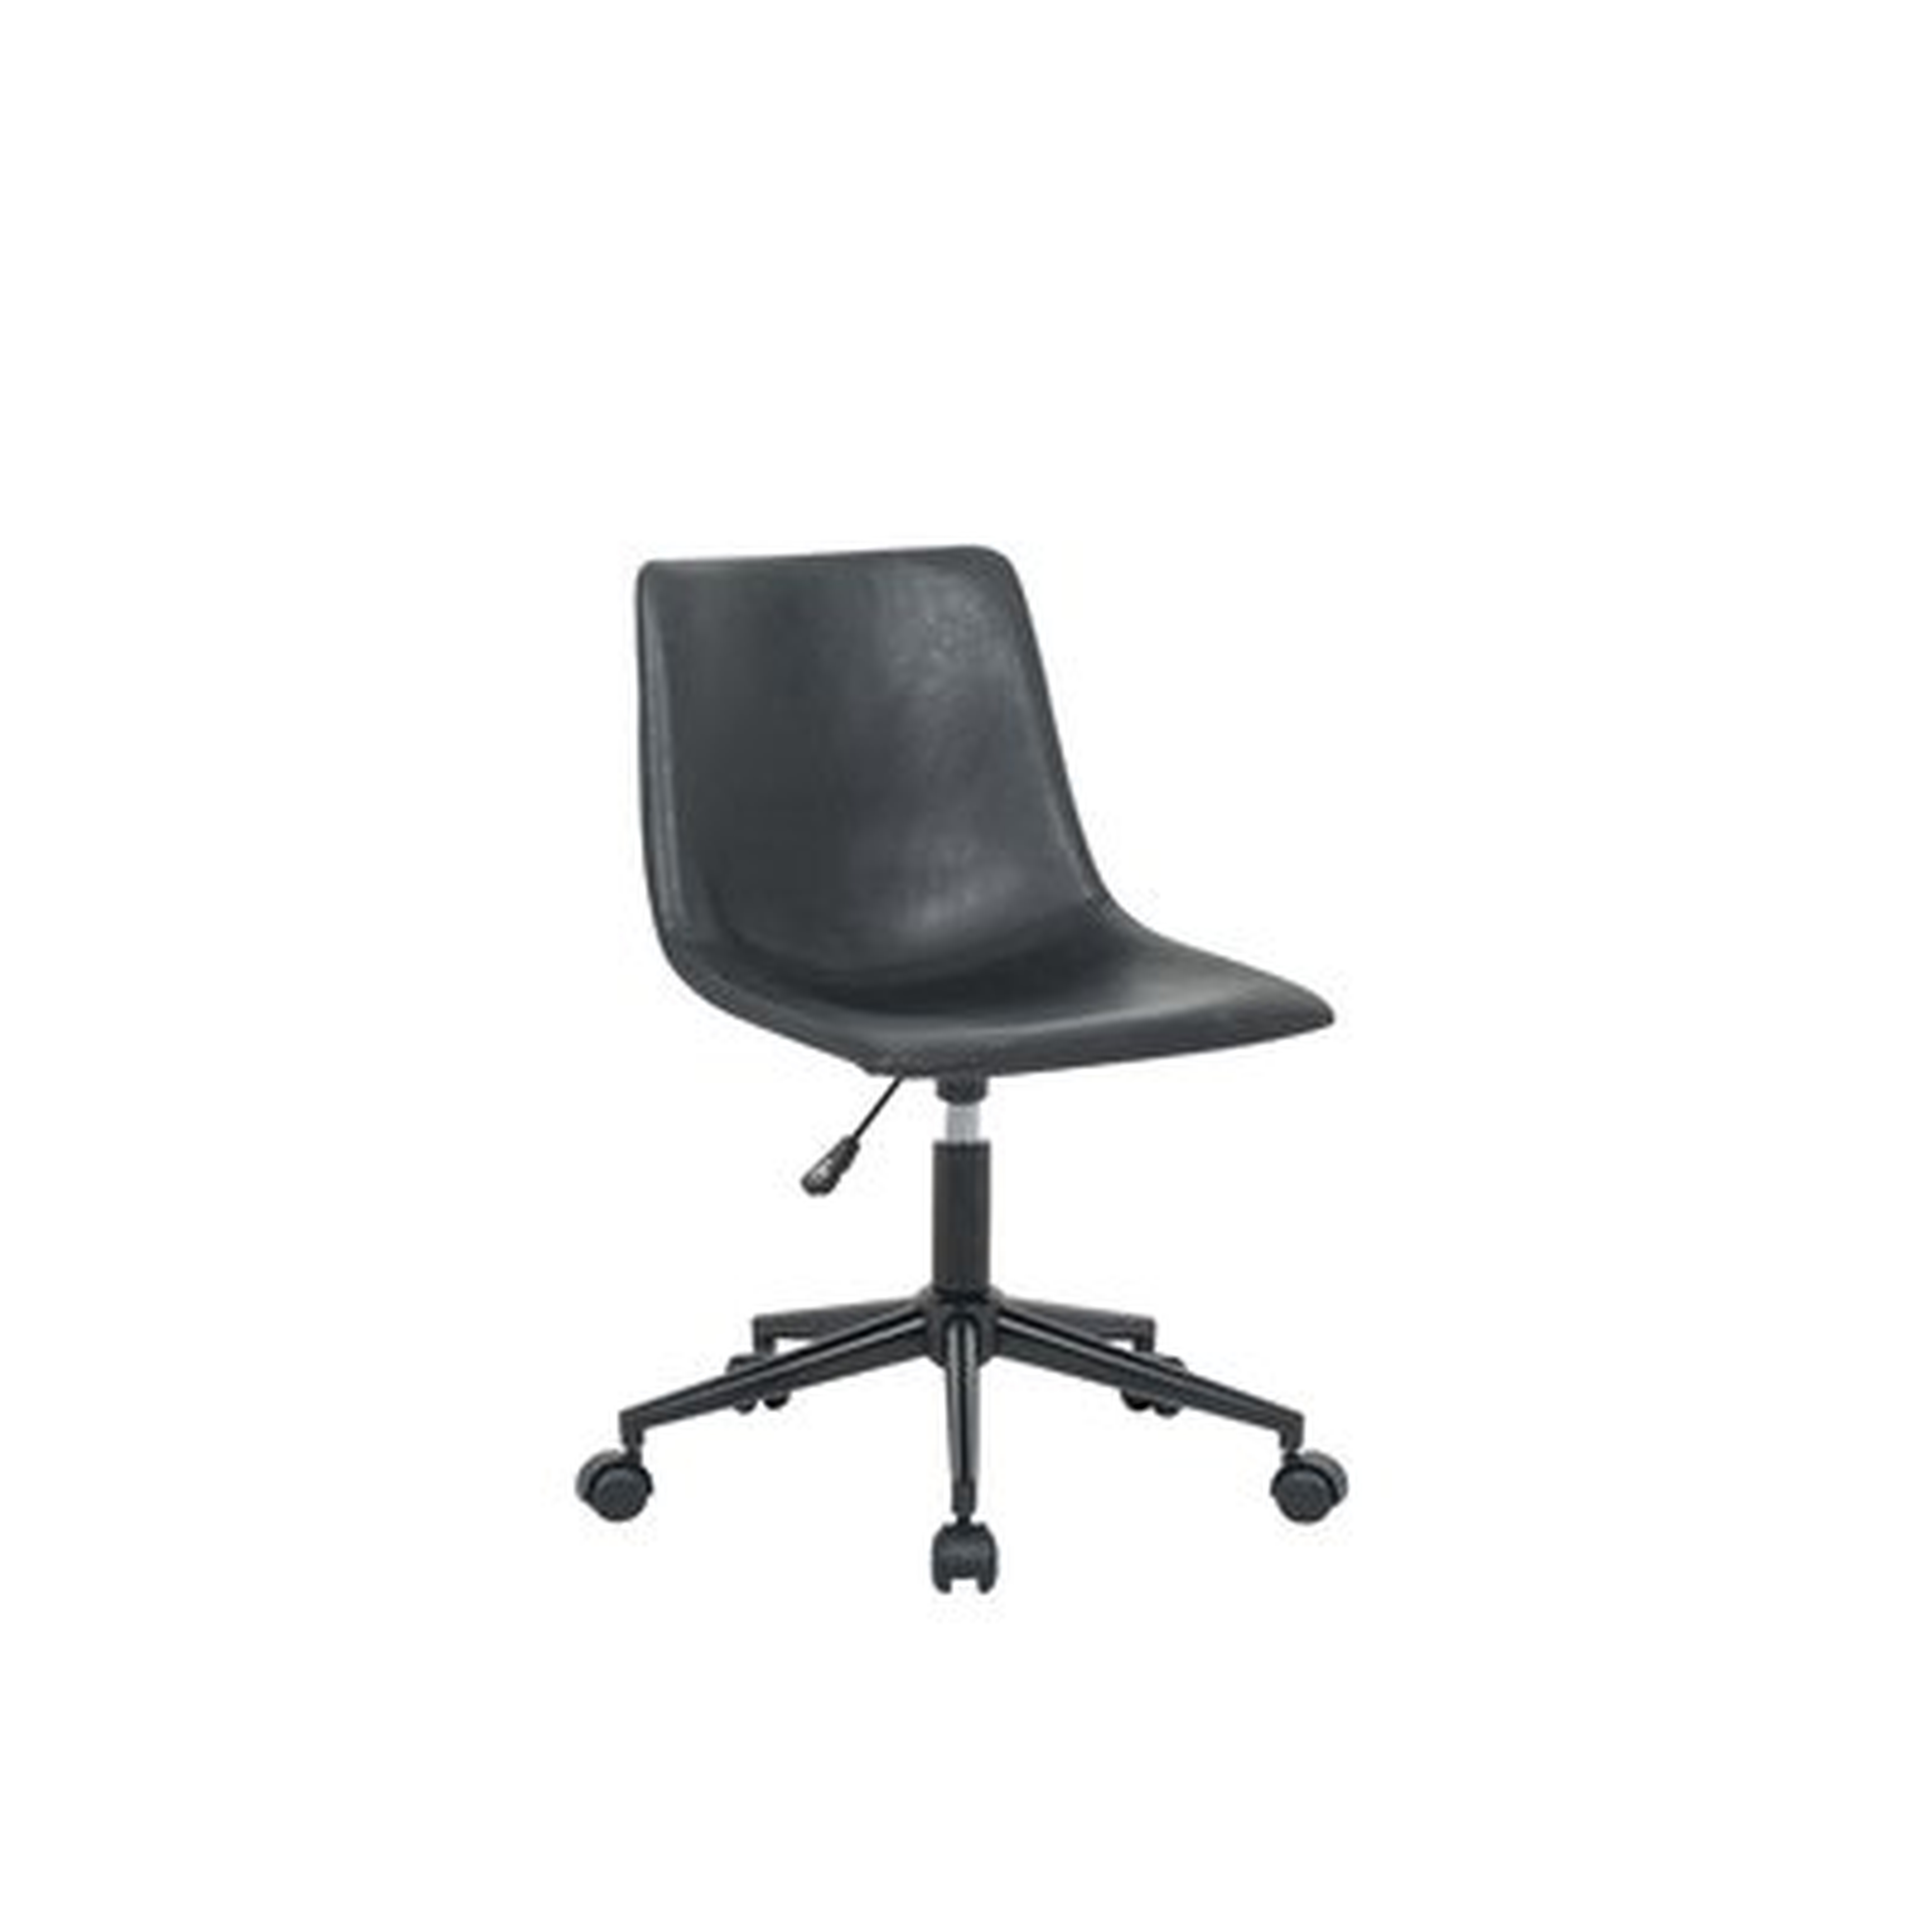 Office Chair - Wayfair